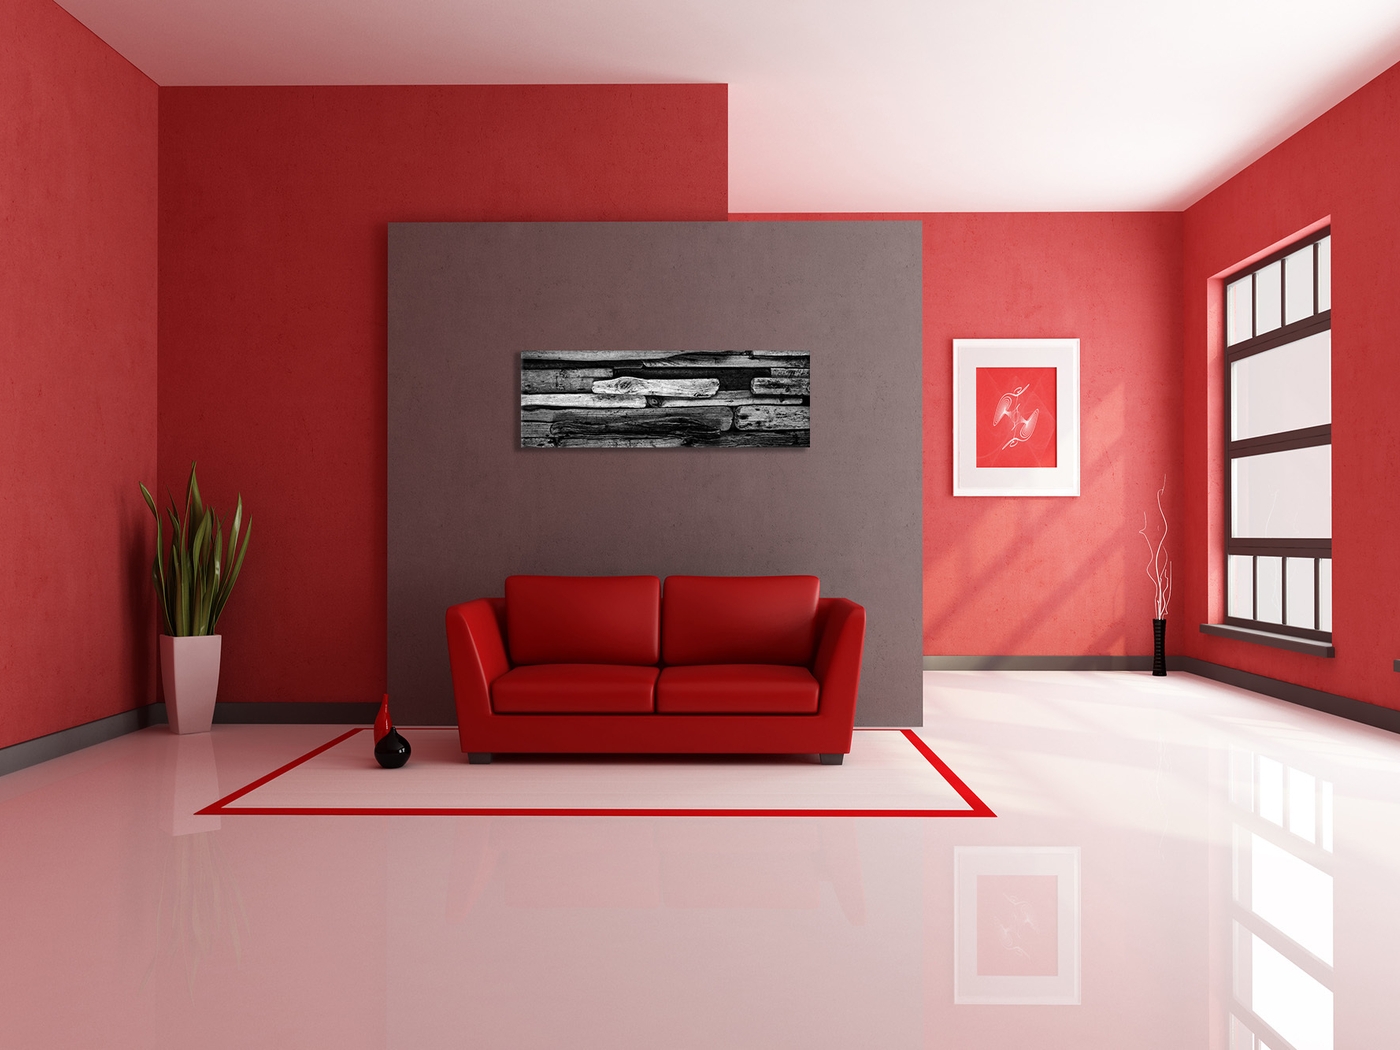 Image: Room, sofa, red, light, wall, window, flower